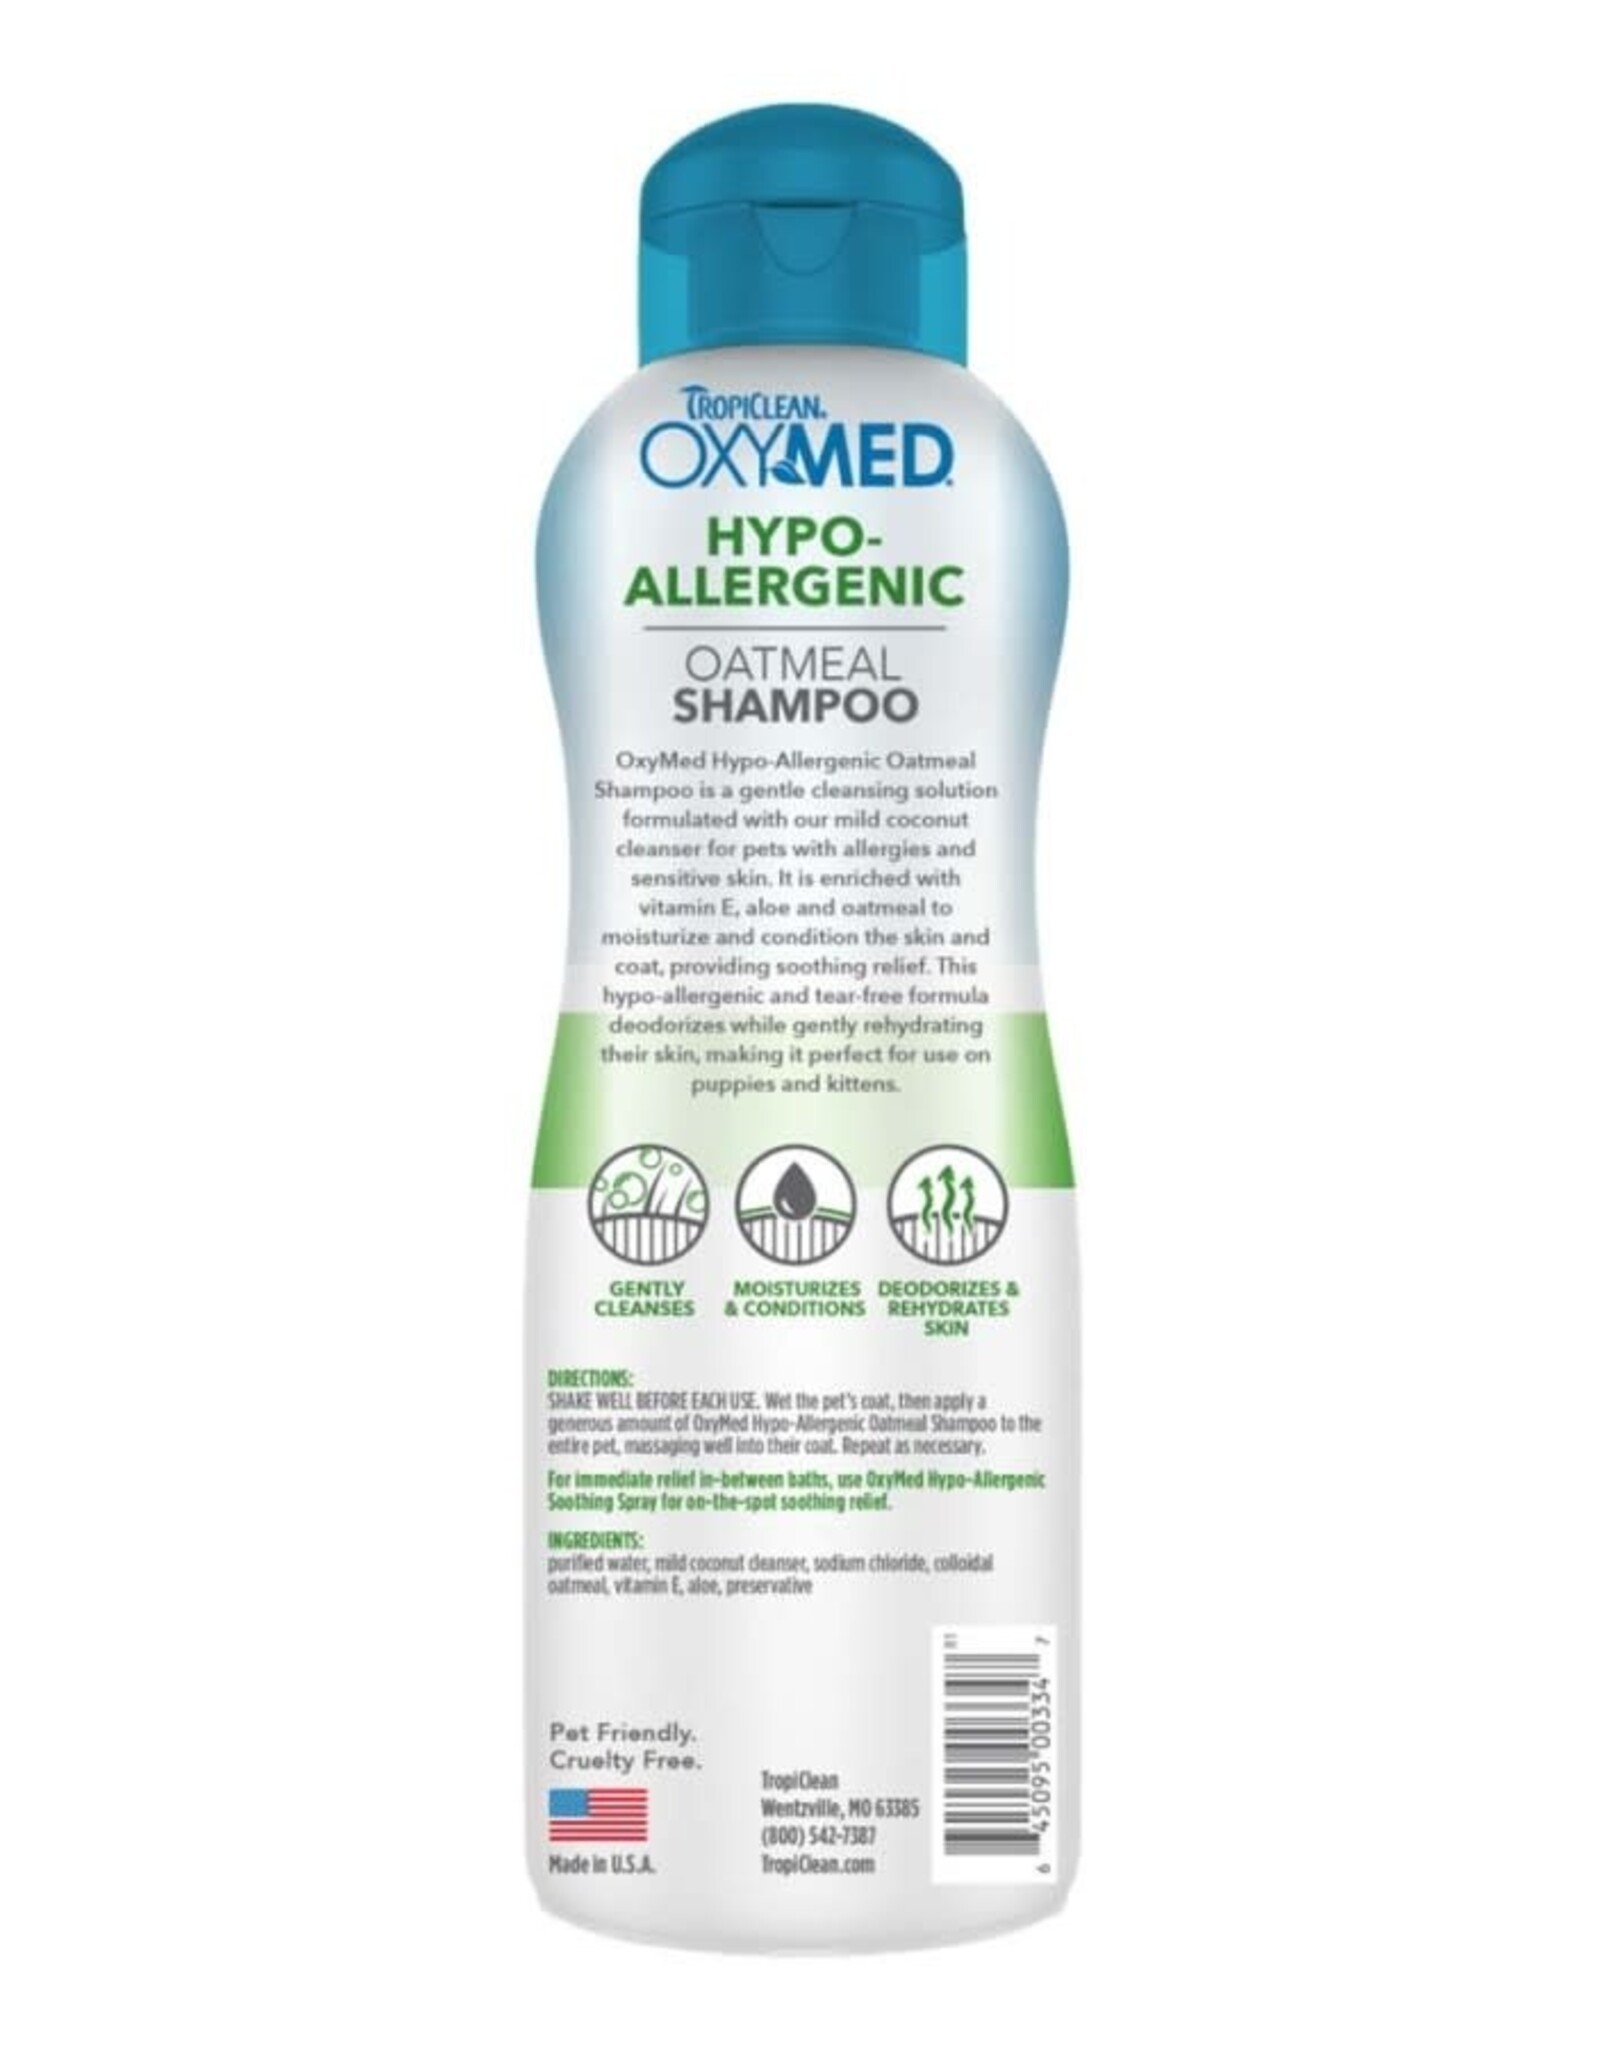 Tropiclean OXY-MED HYPO-ALLERGENIC 20OZ SHAMPOO